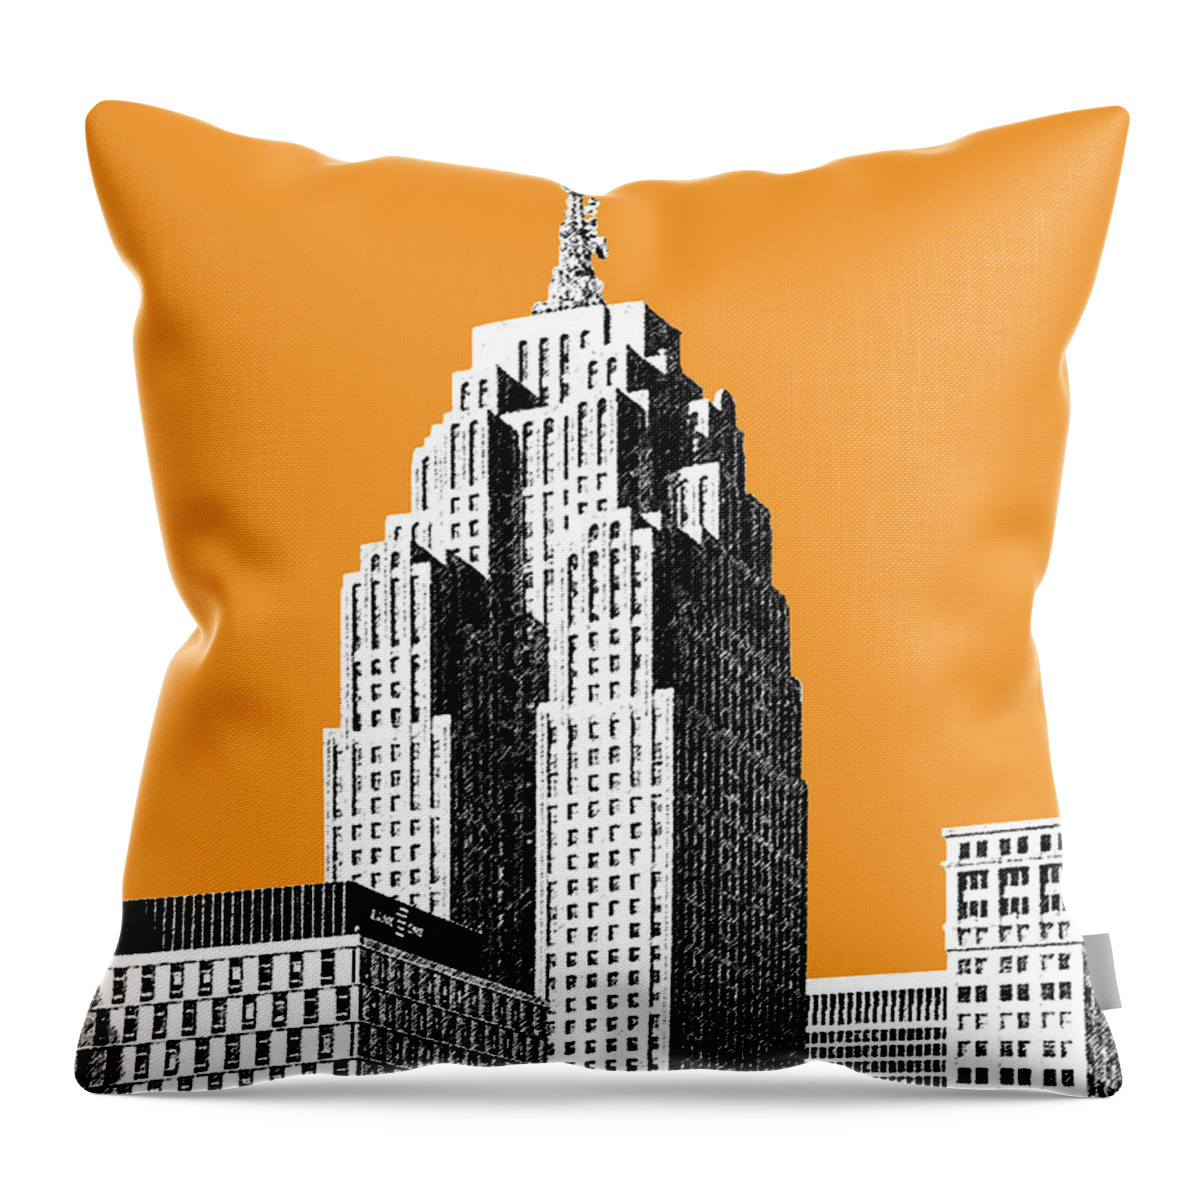 Detroit Throw Pillow featuring the digital art Detroit Skyline 2 - Orange by DB Artist